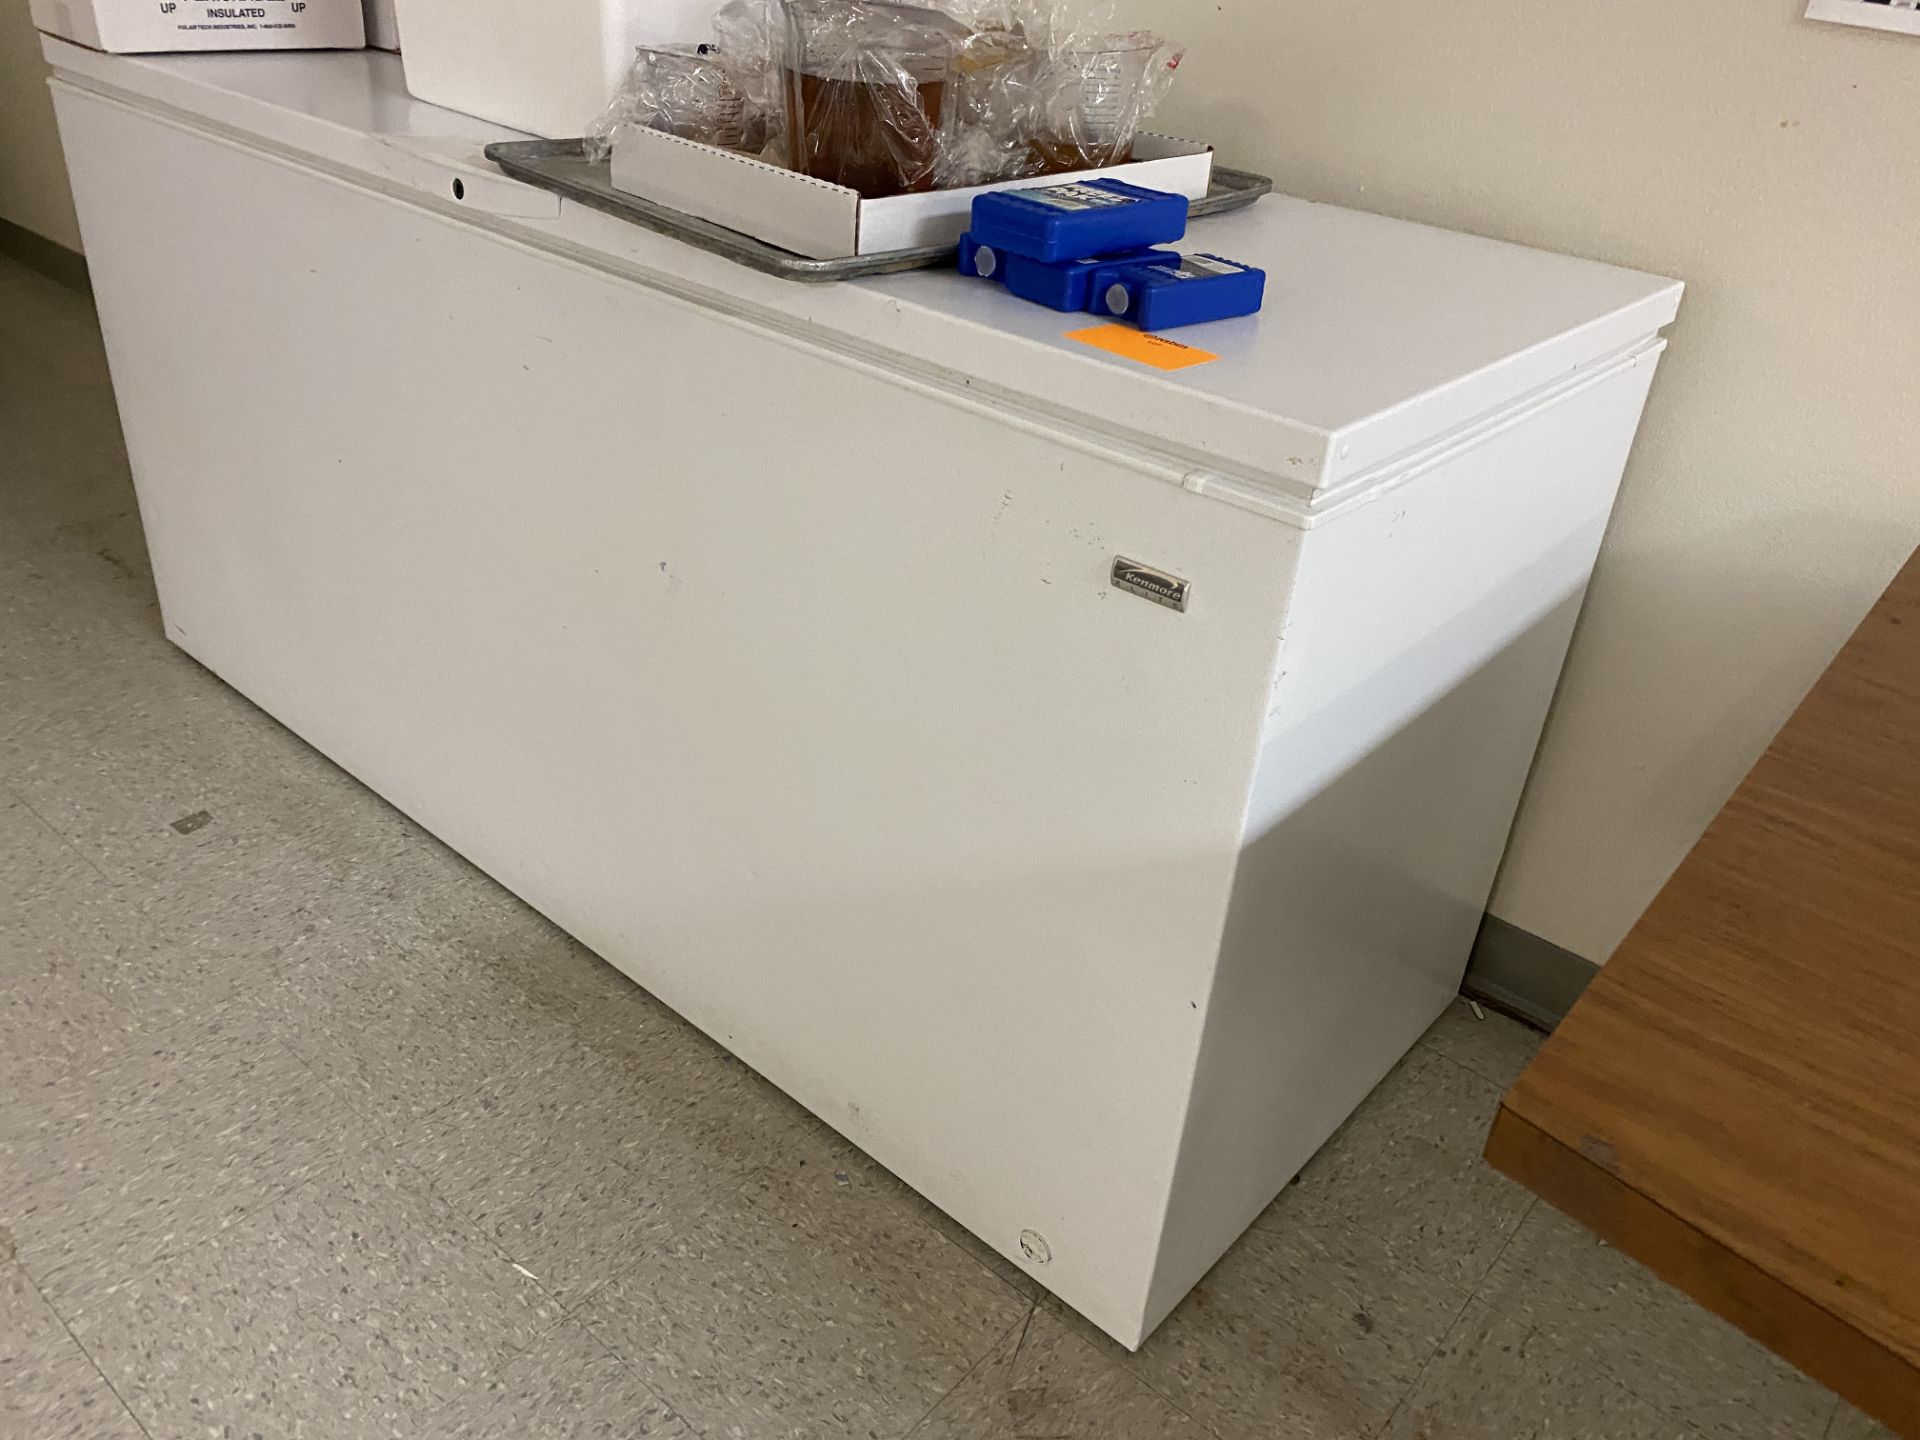 [LOT] (1) Kenmore chest freezer plus (1) refrigerator [Rigging Fee: $50]